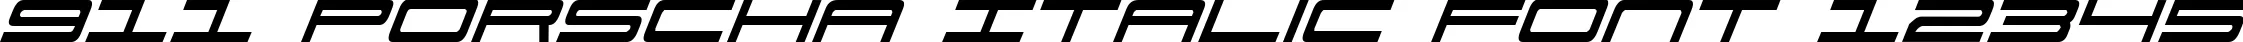 Dynamic 911 Porscha Italic Font Preview https://safirsoft.com